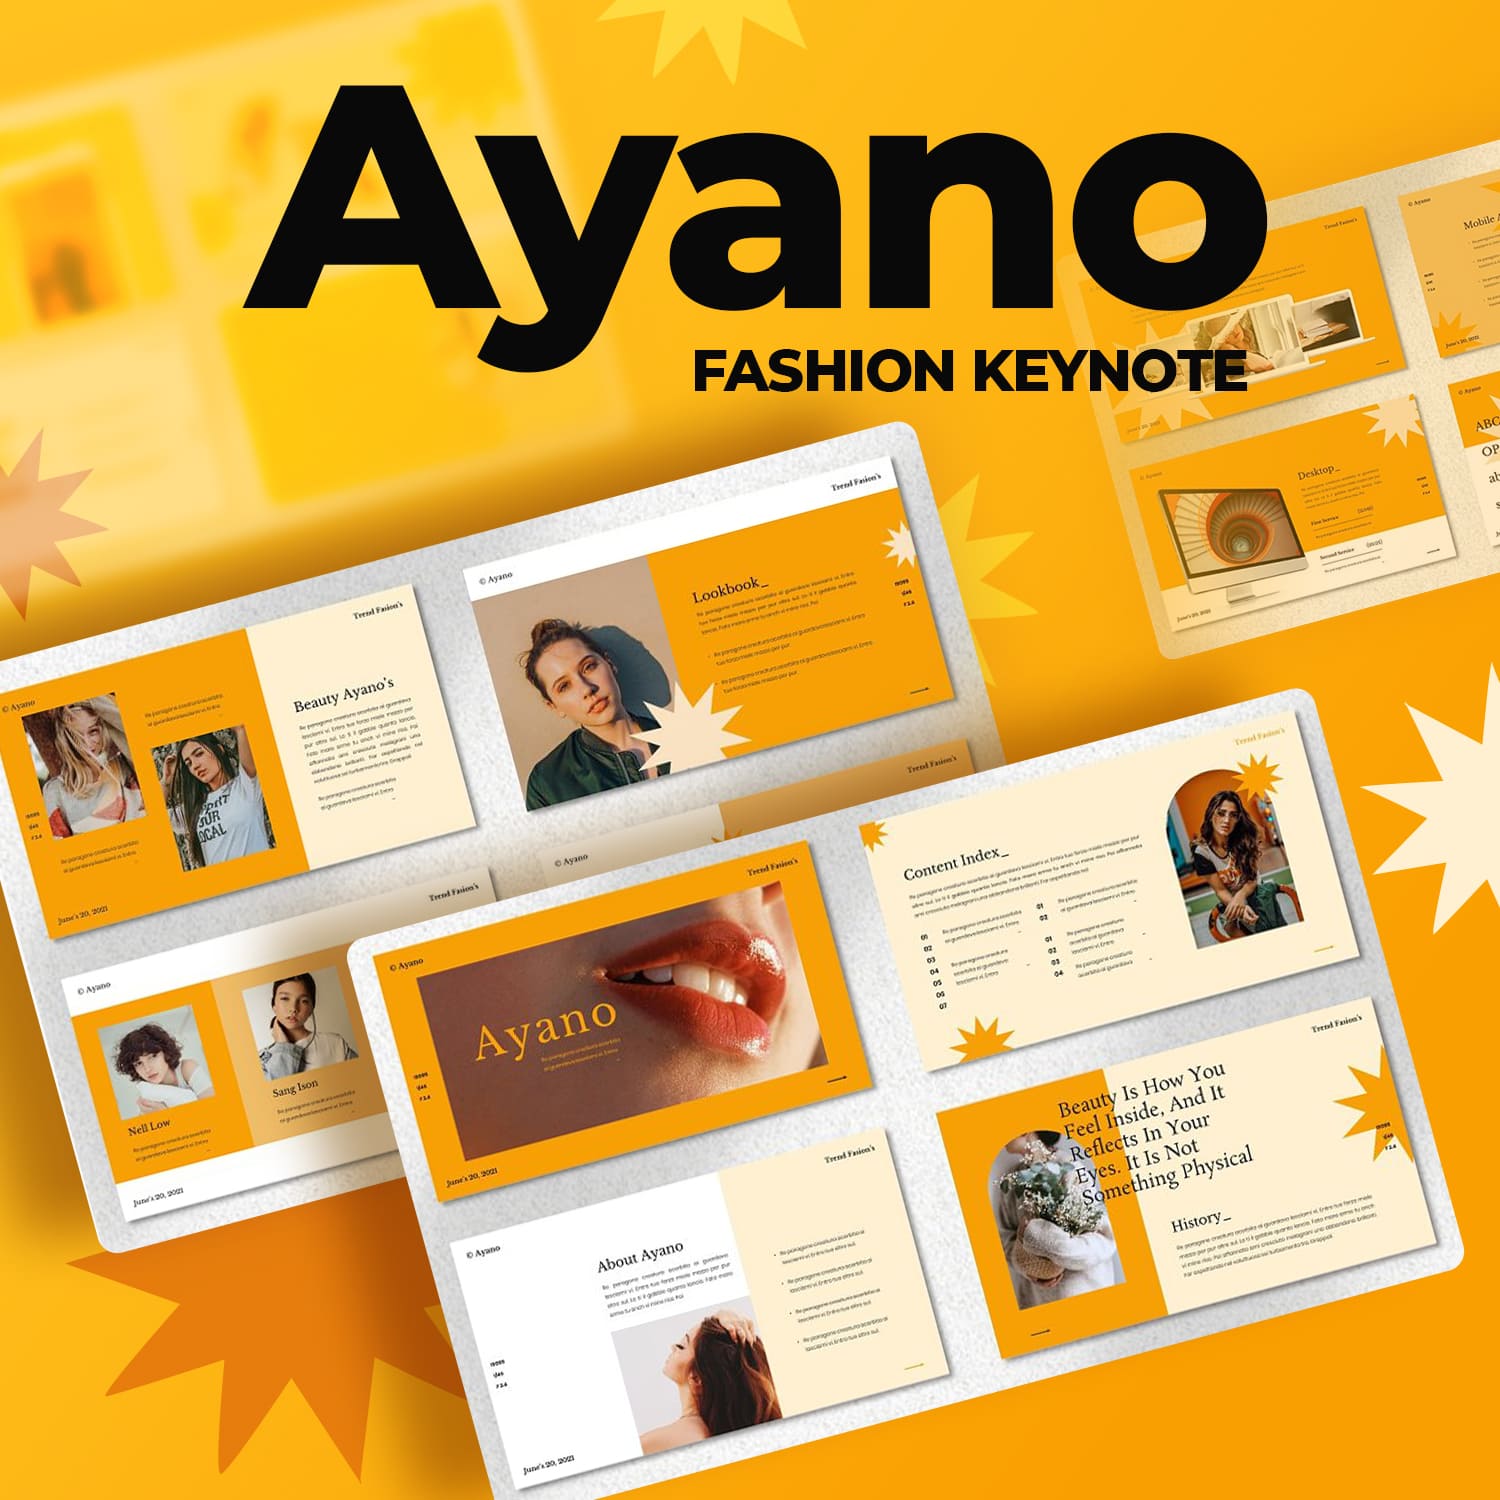 Ayano - Fashion Keynote.